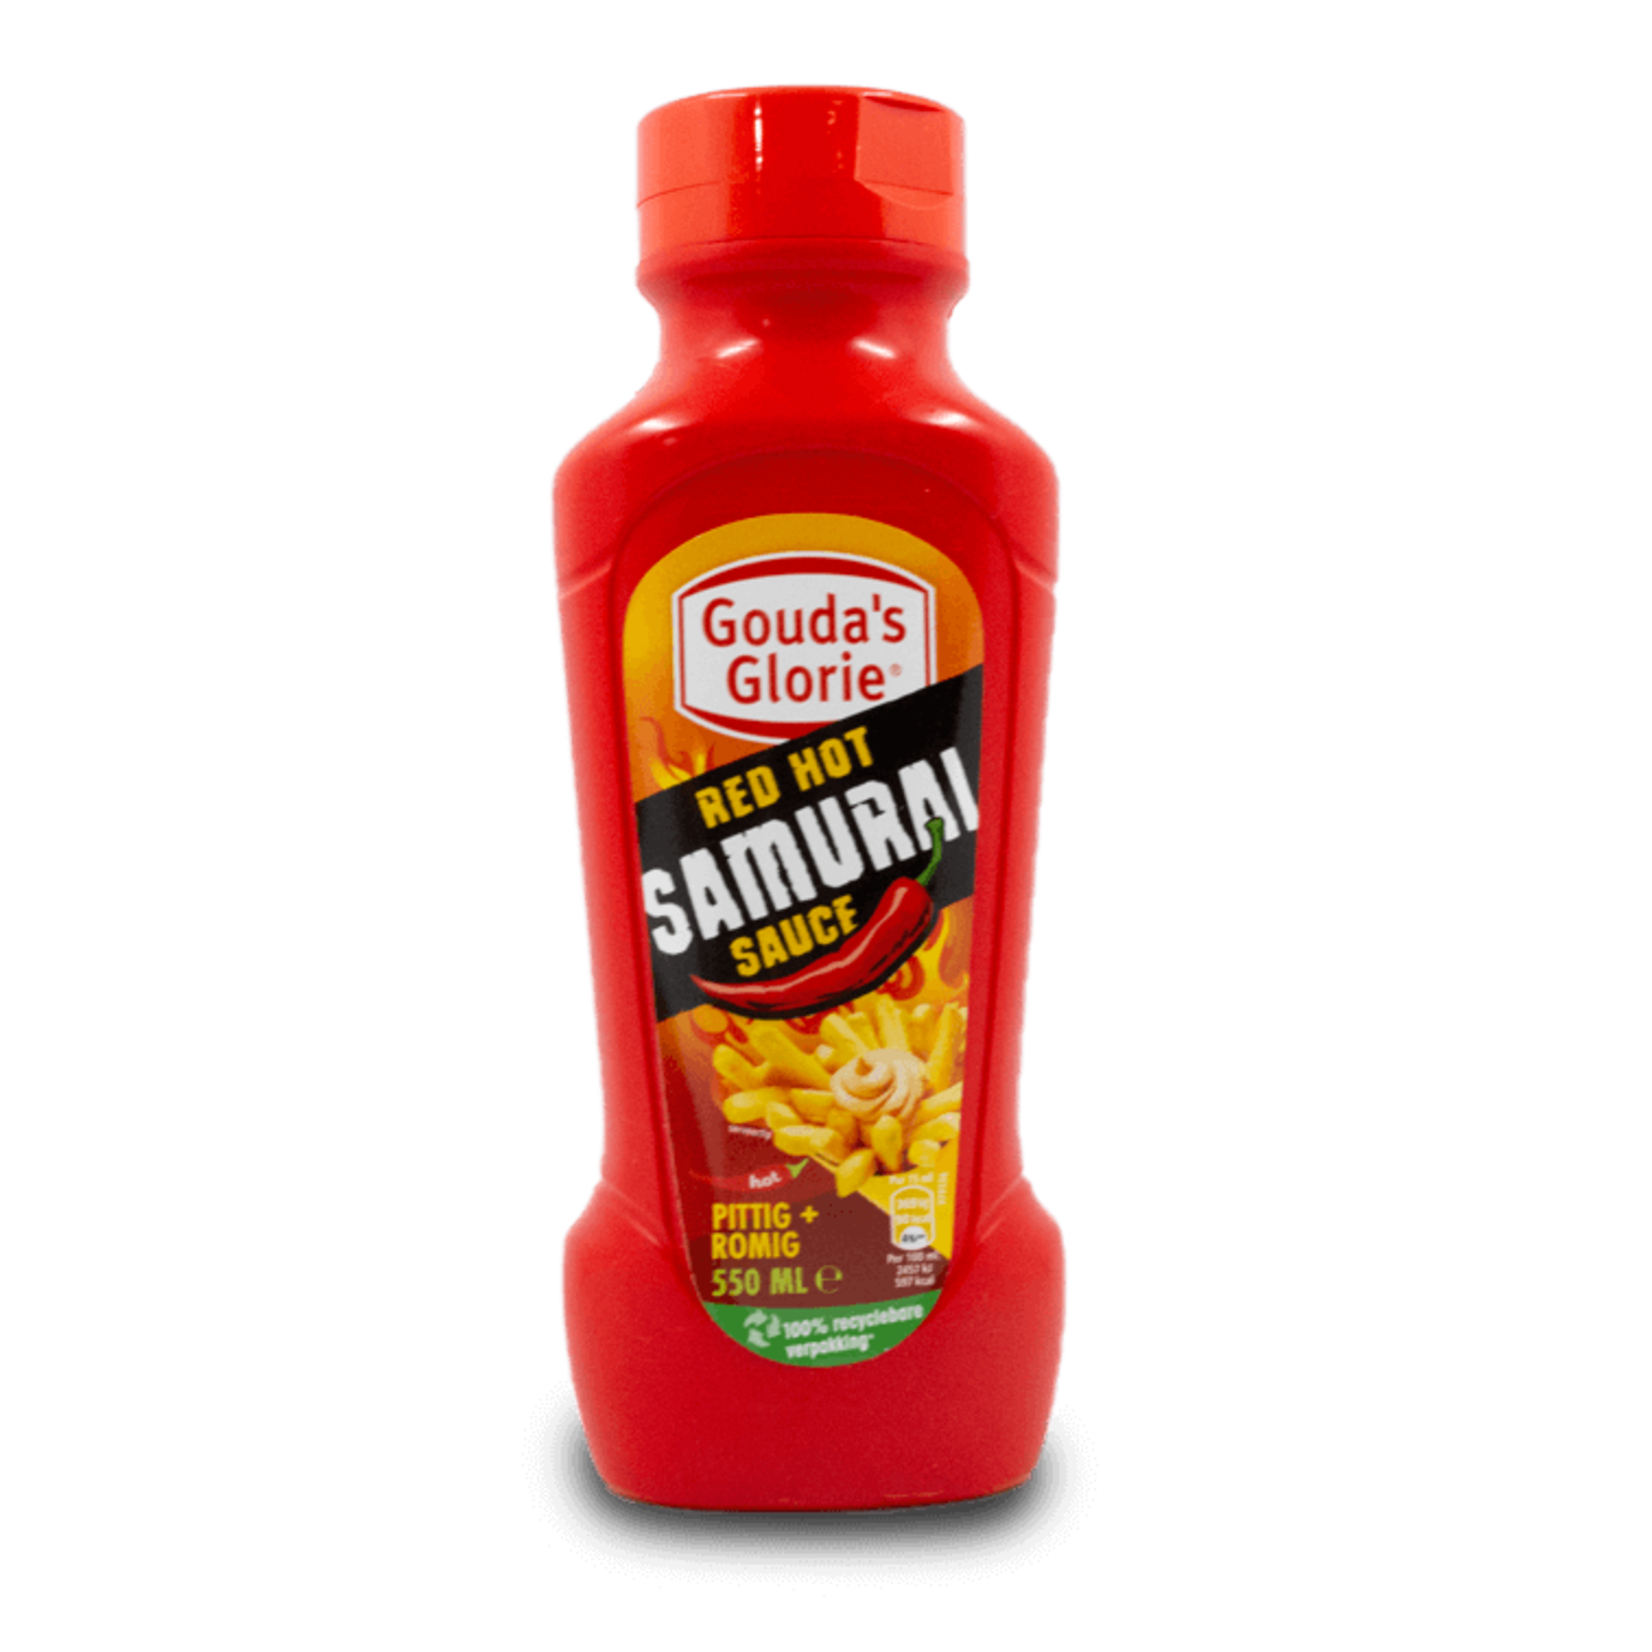 Gouda's Glorie Gouda's Glorie Hot Samurai Sauce 550ml